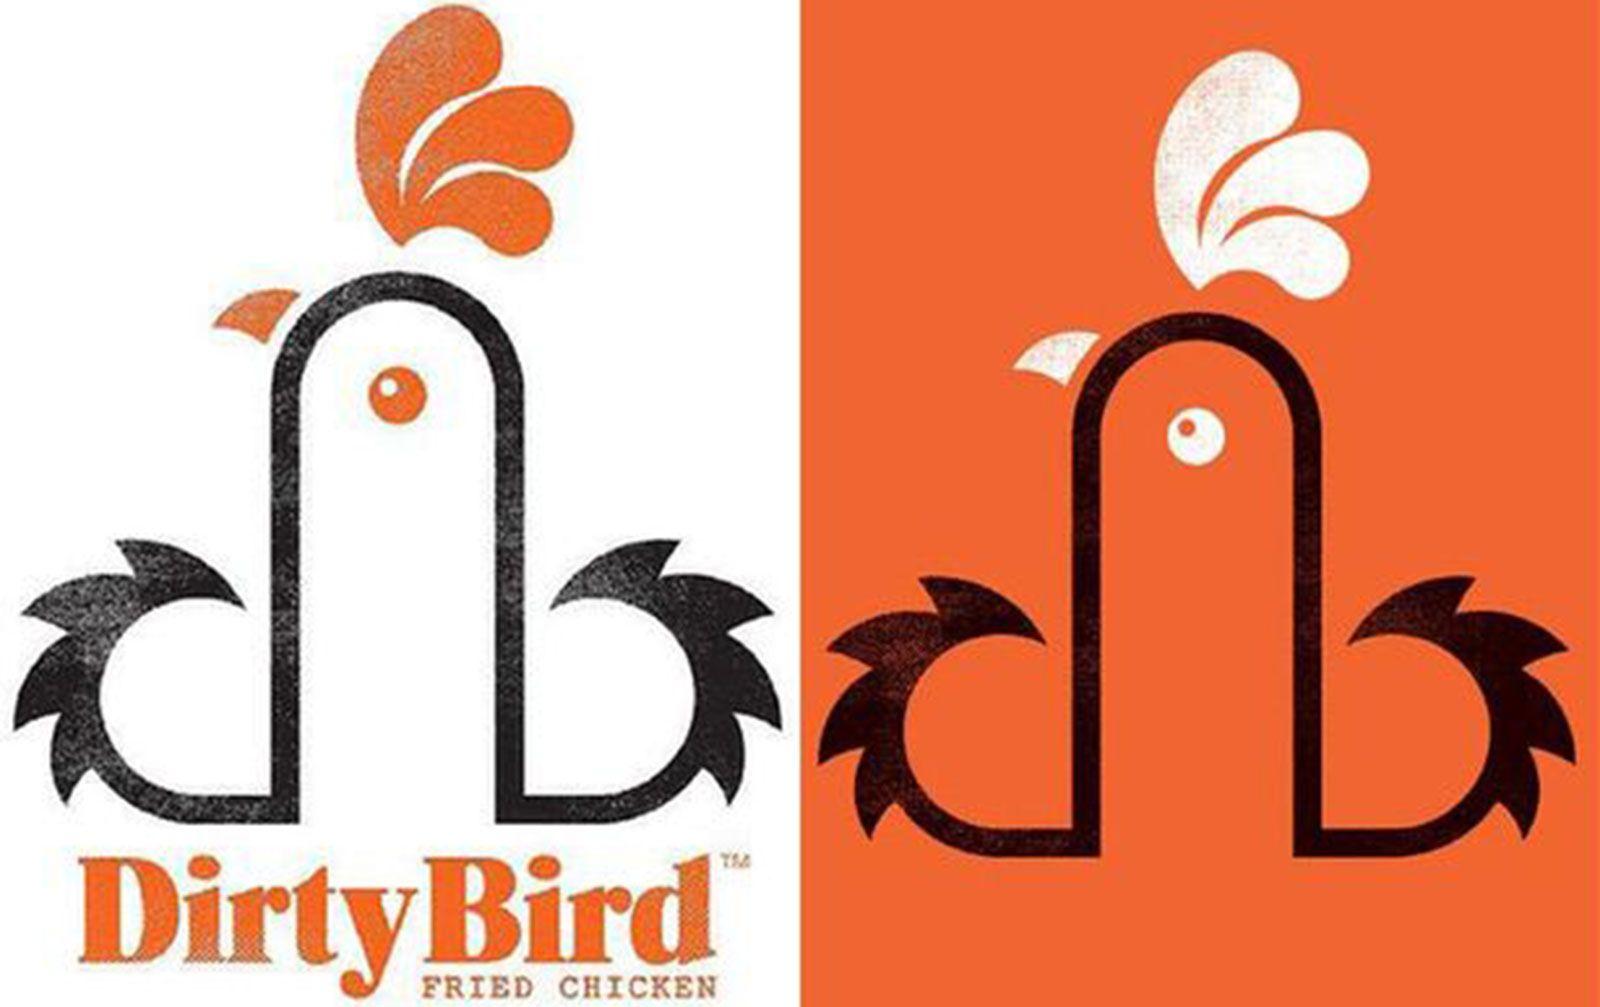 Orange Bird Company Logo - Dirty Bird logo but clever